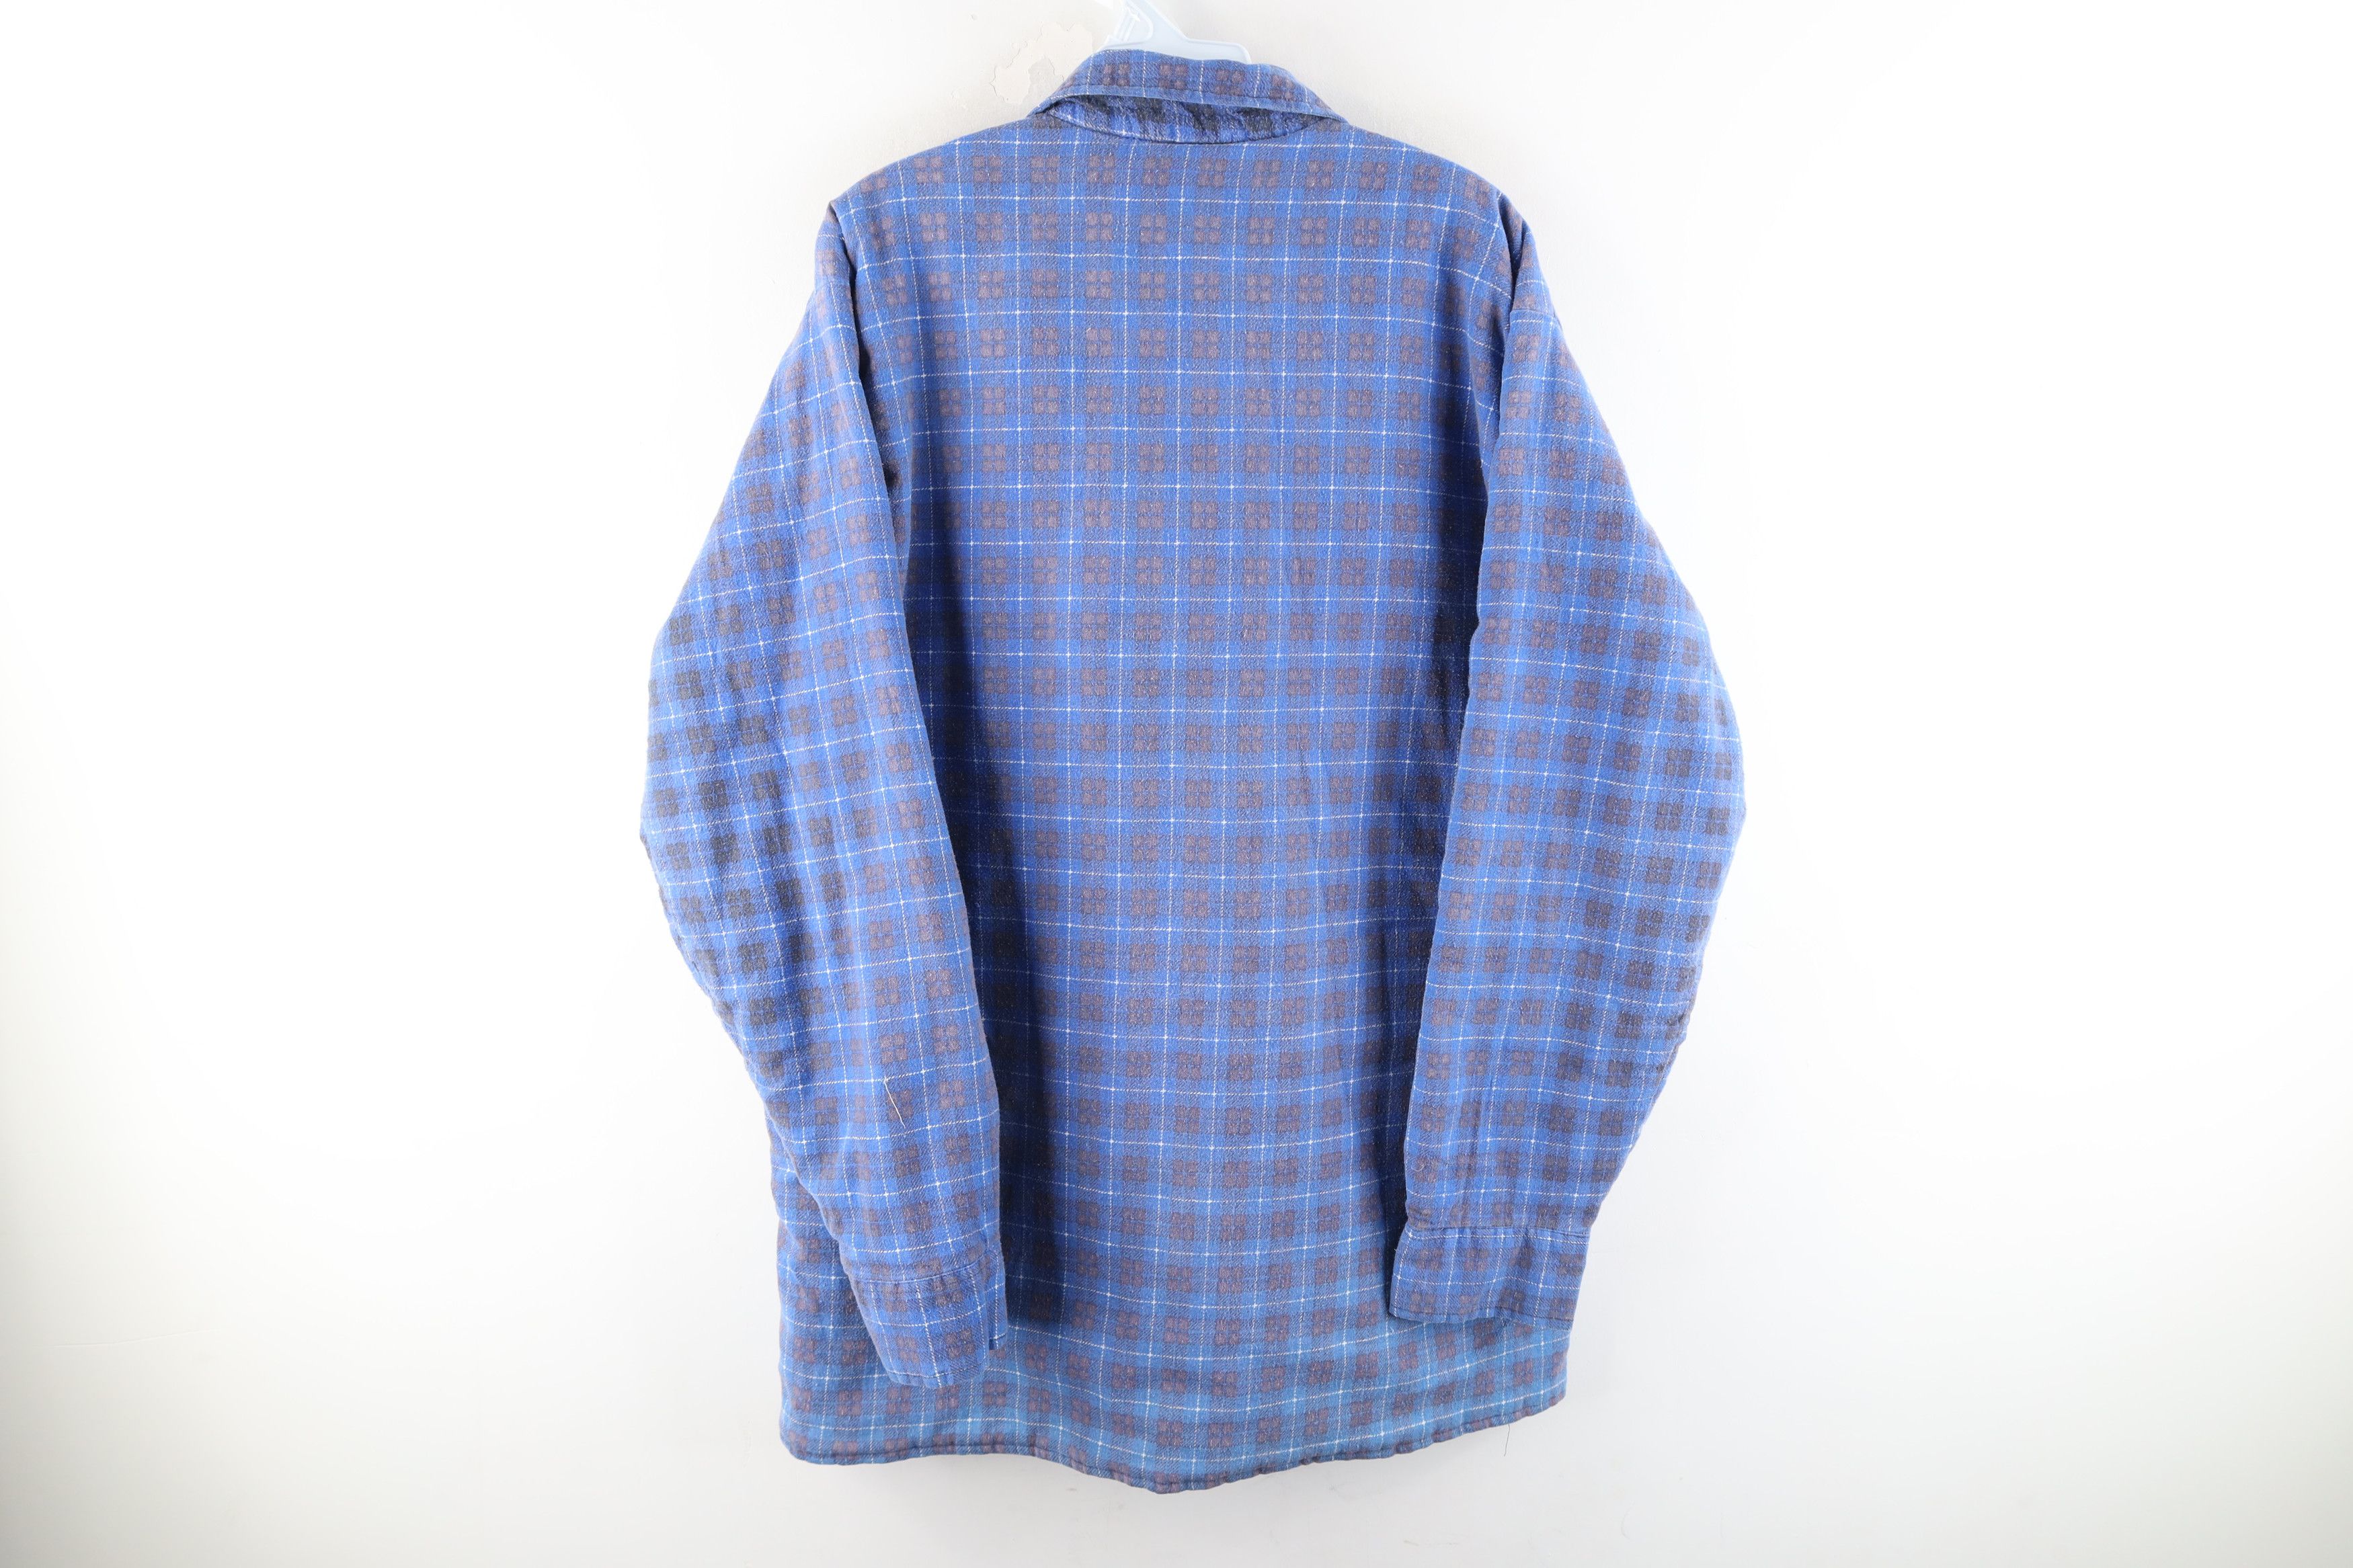 Vintage Vintage 80s Lee Thrashed Double Pocket Flannel Shirt Jacket Size US L / EU 52-54 / 3 - 6 Thumbnail